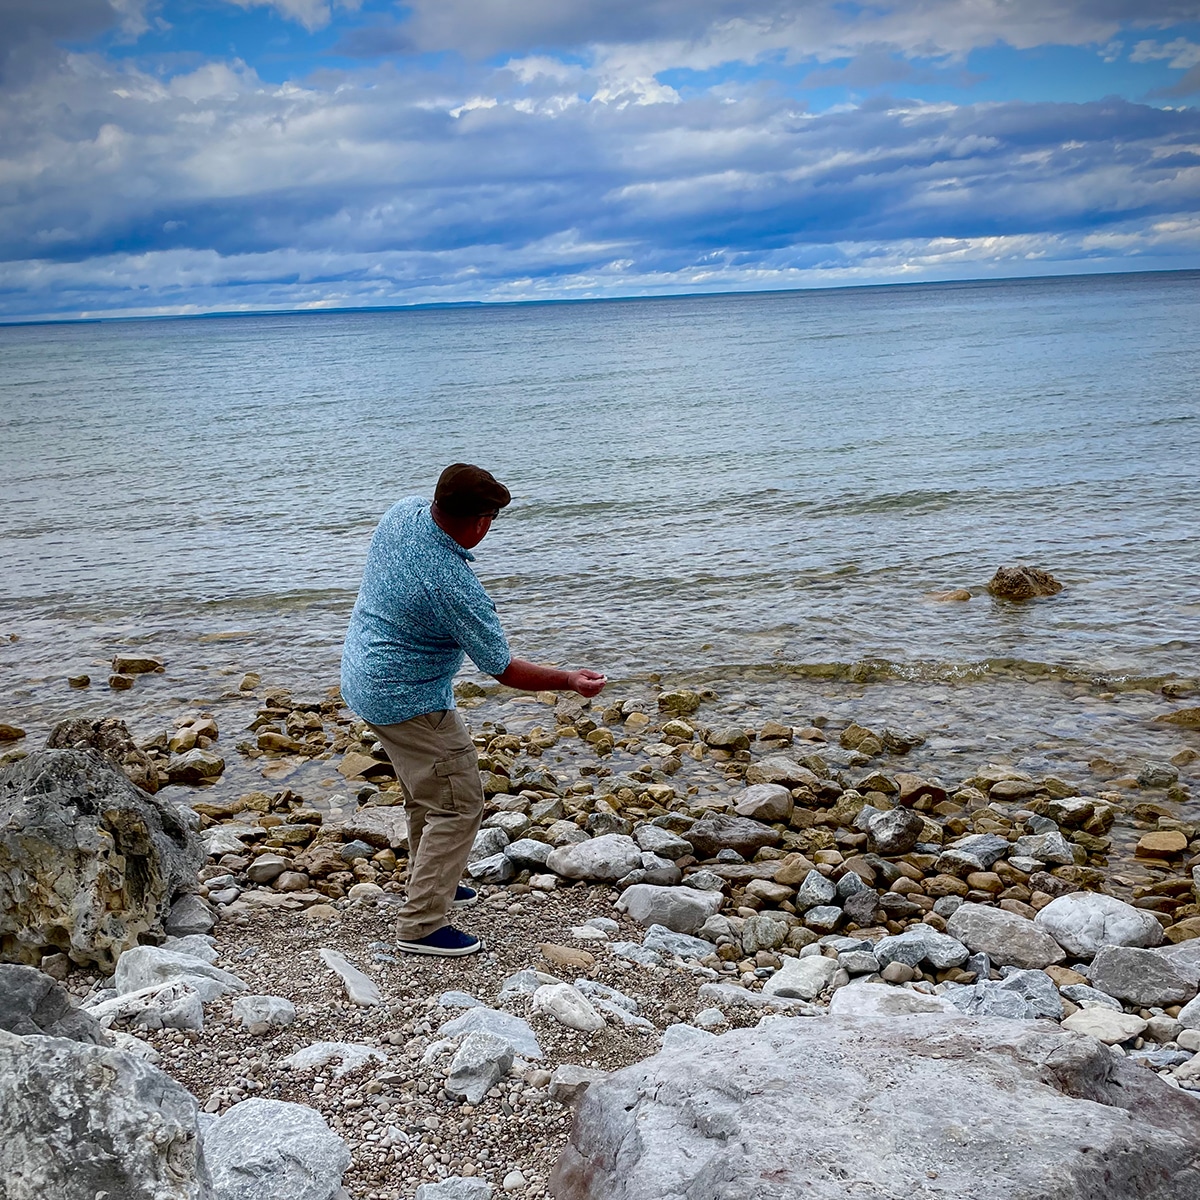 Steve skipping rocks in Lake Michigan from a rocky beach on Mackinac Island.